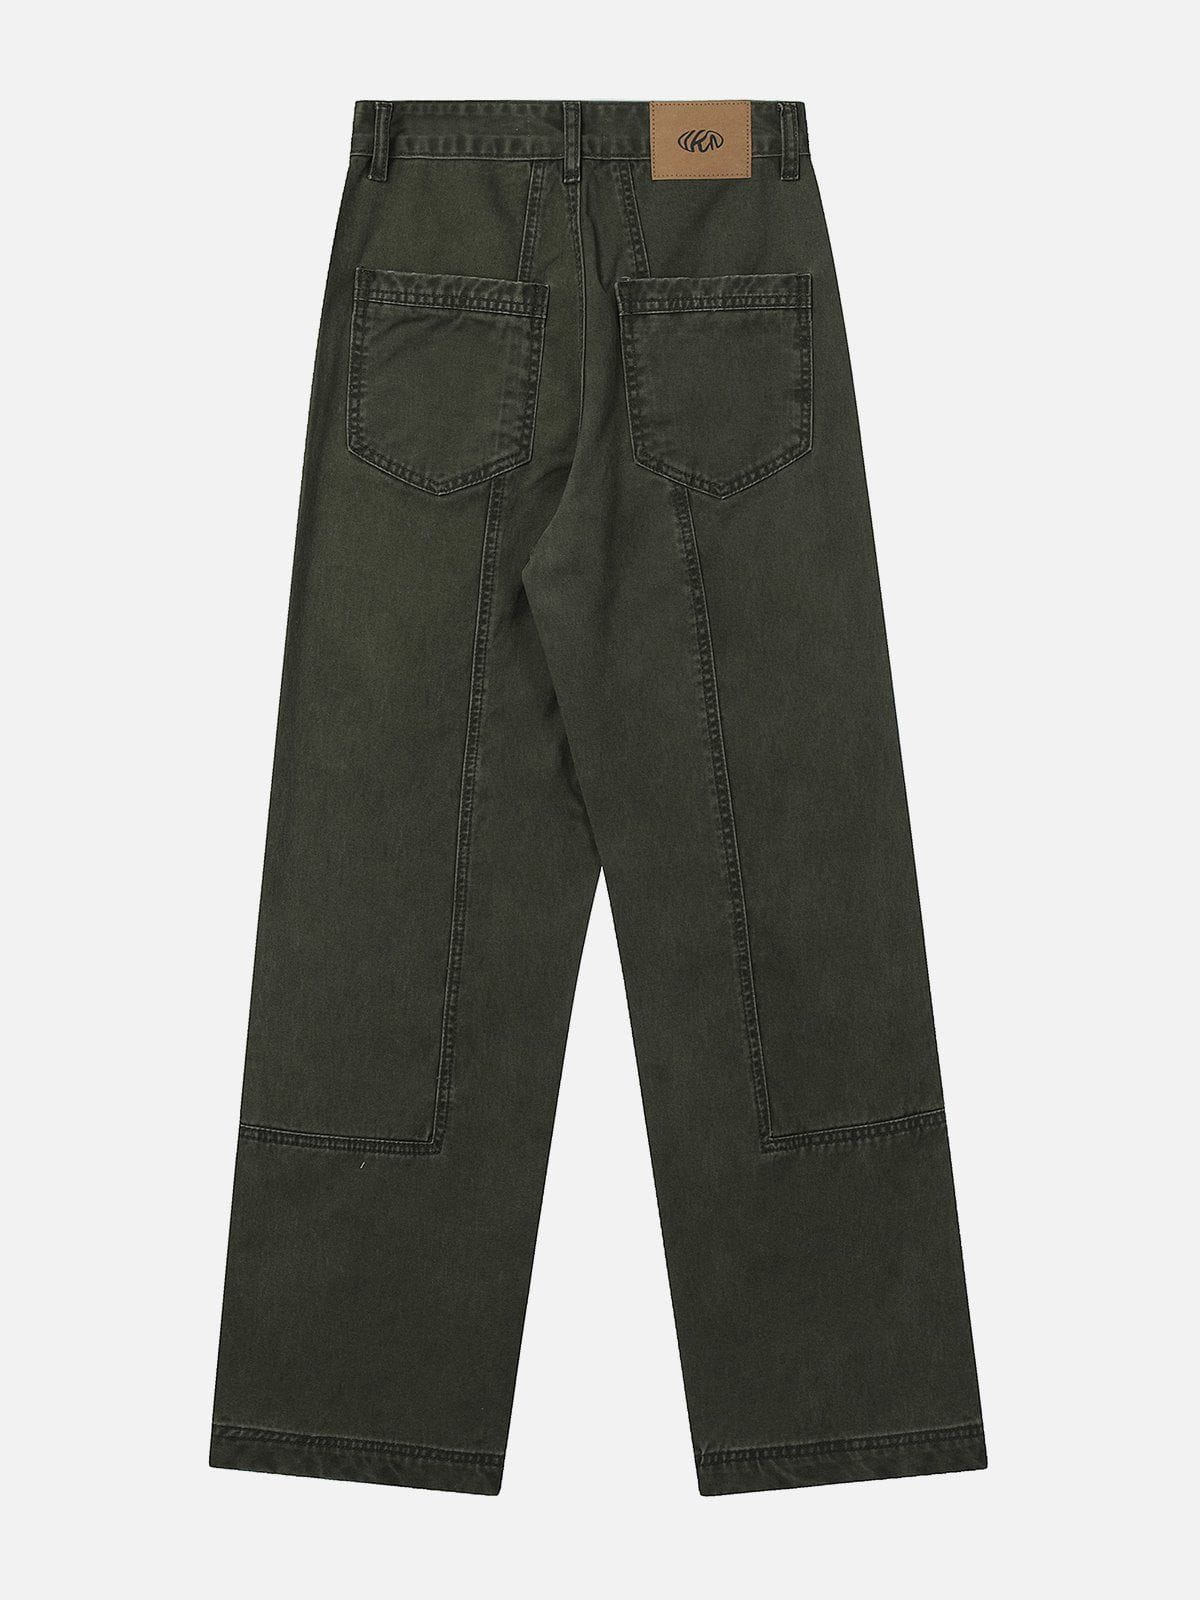 Majesda® - Pocket Patchwork Cargo Pants outfit ideas streetwear fashion